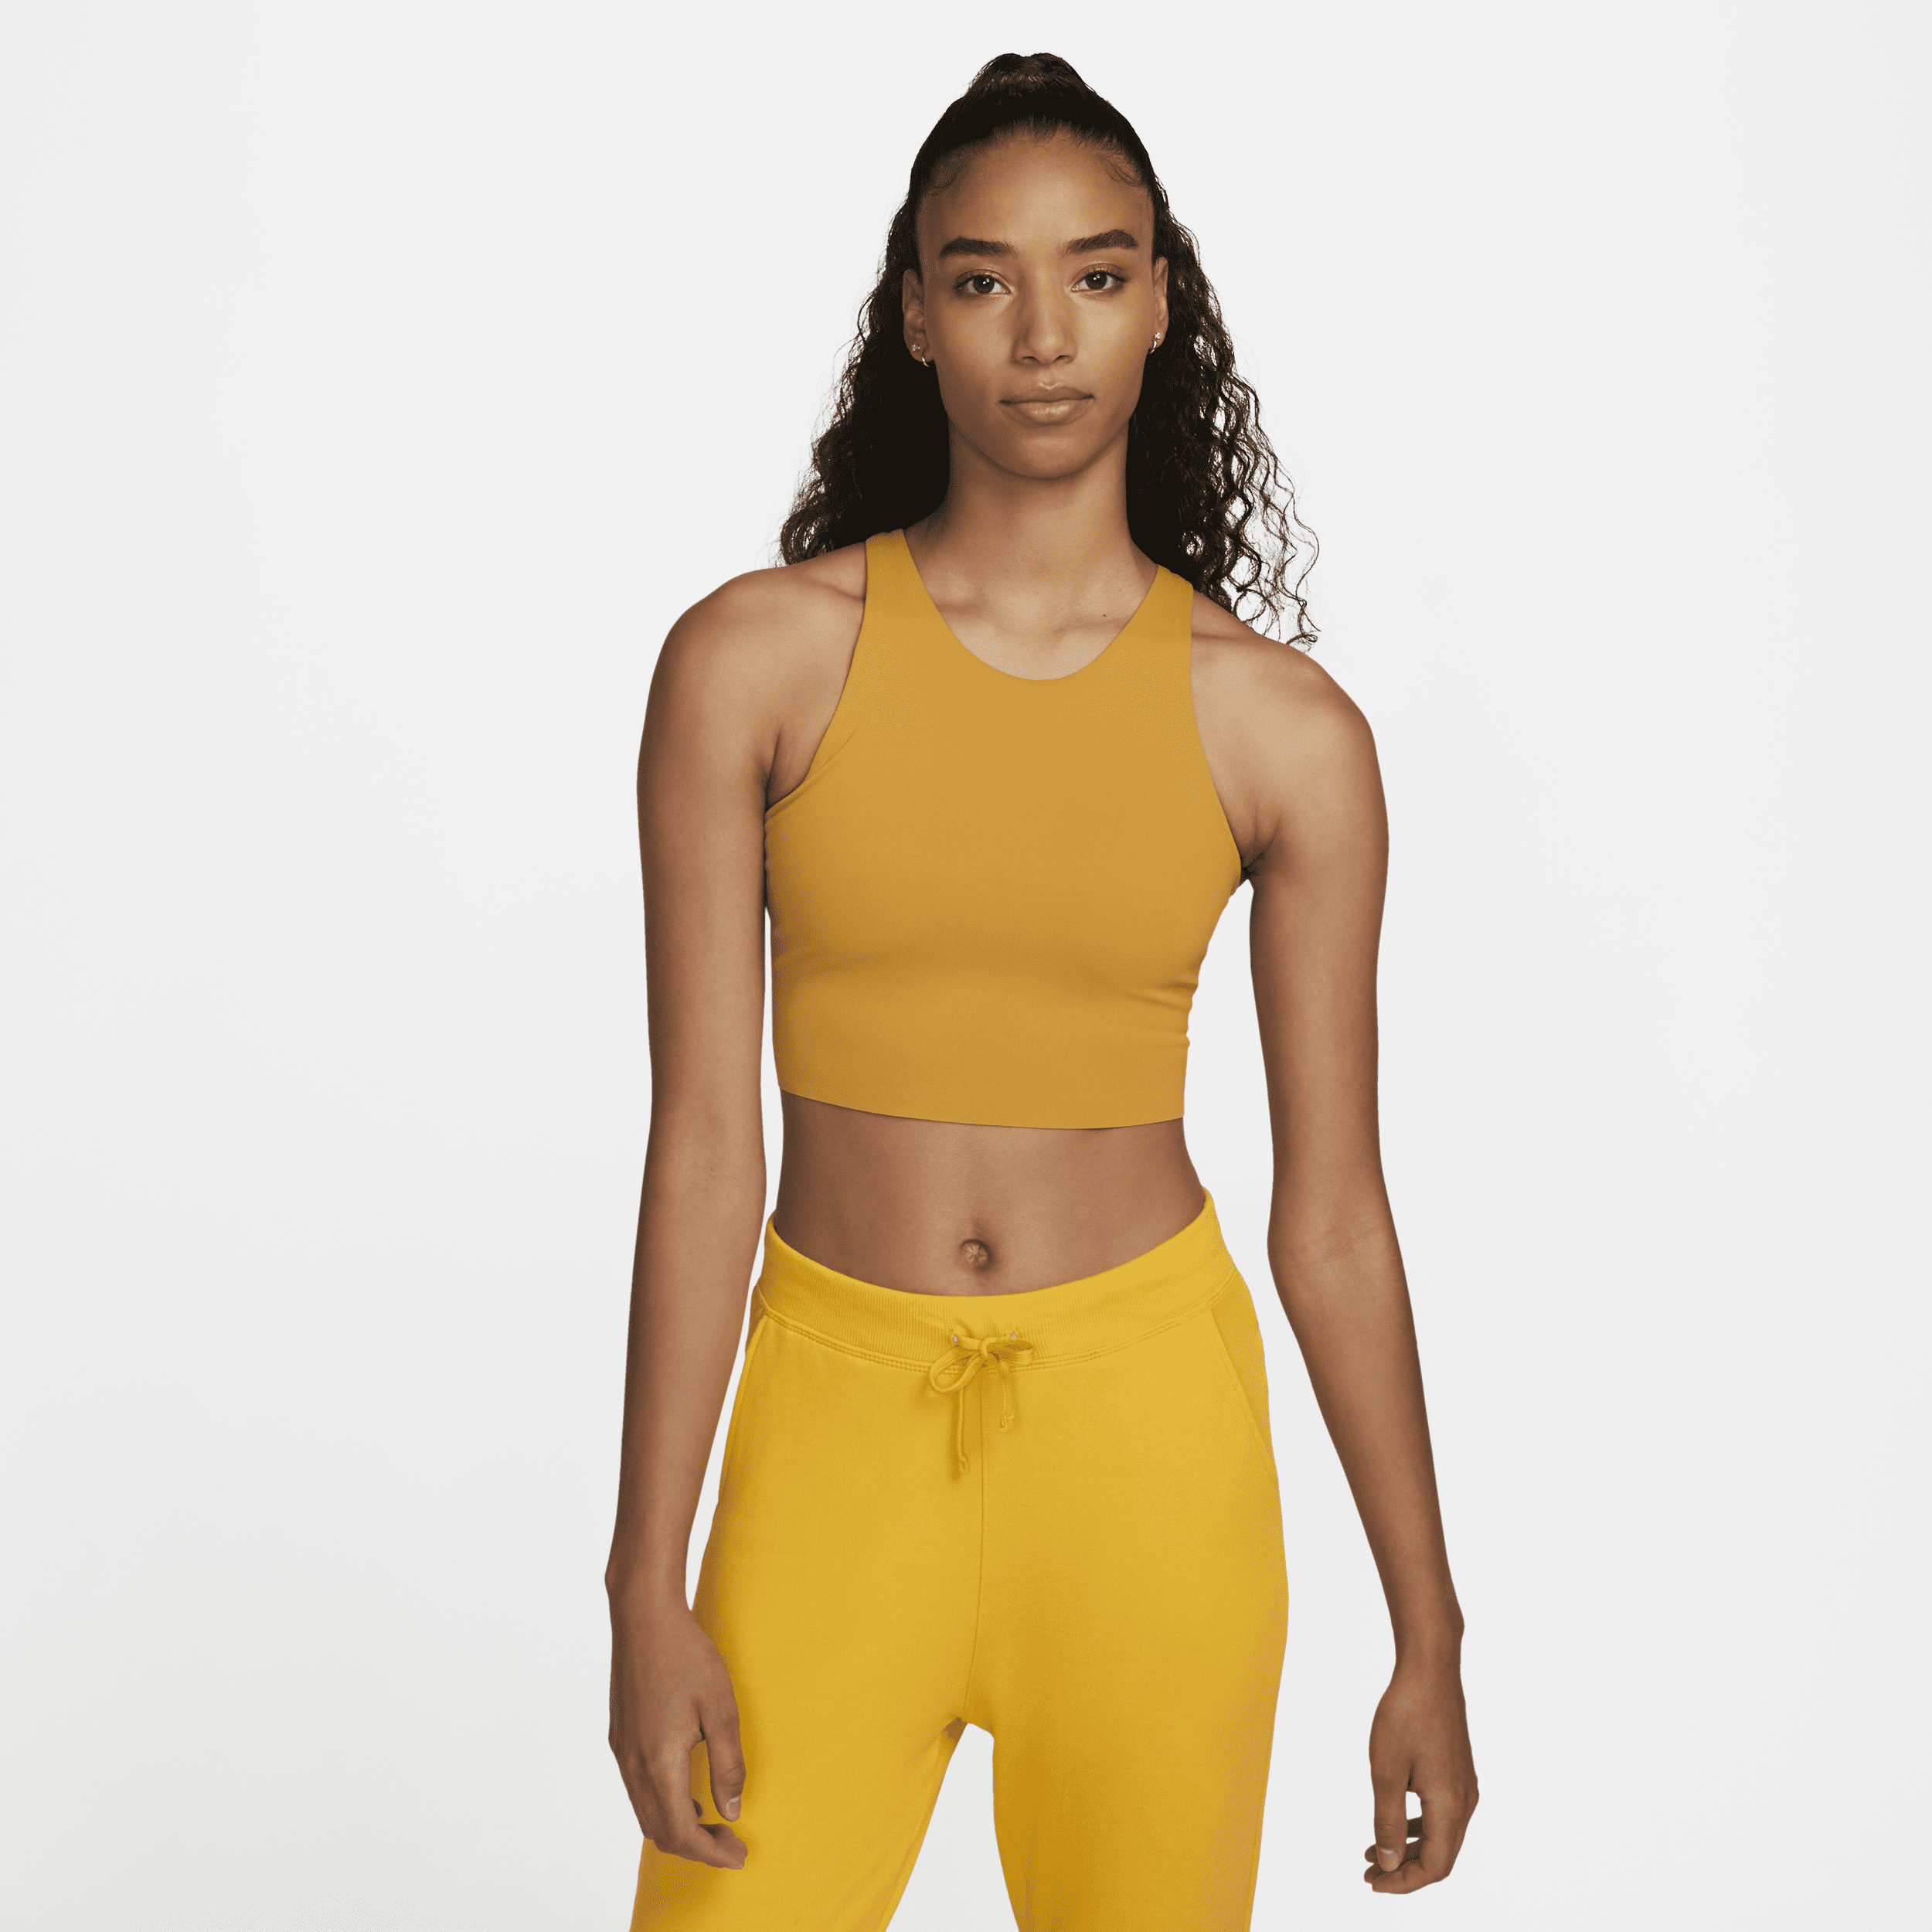 Nike Women's  Yoga Dri-fit Luxe Shelf-bra Cropped Tank Top In Brown